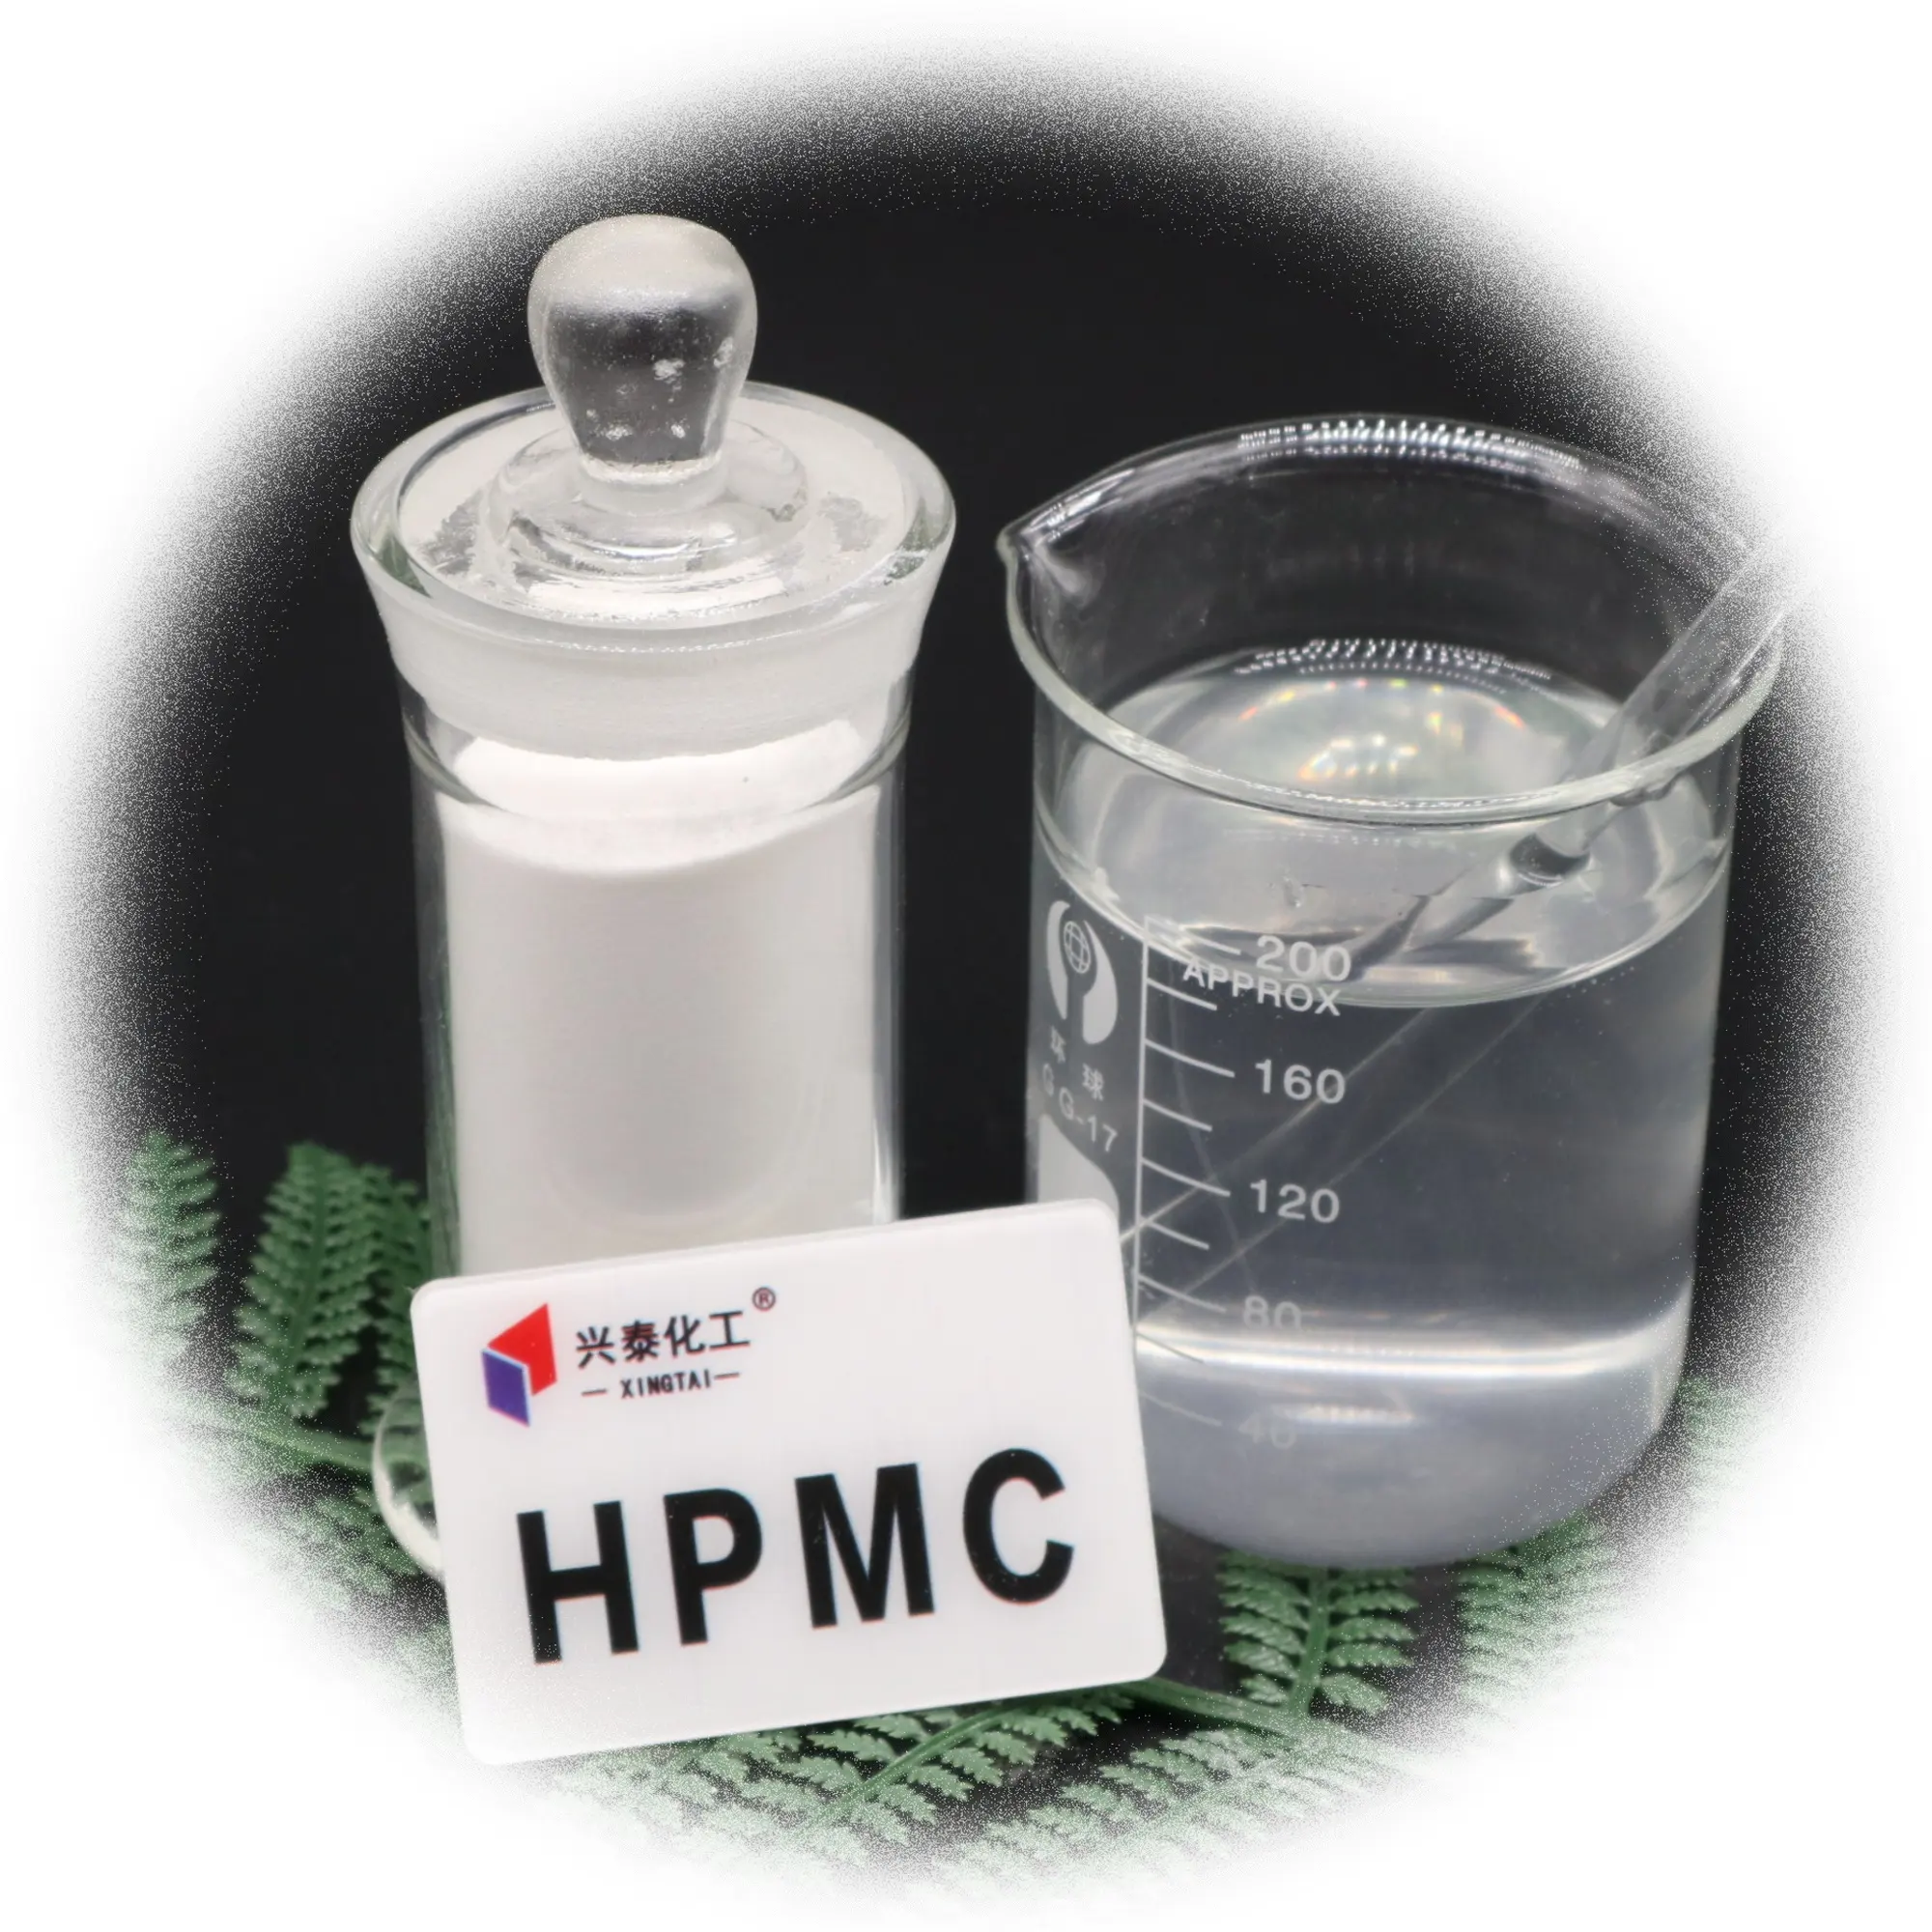 Vendita diretta in fabbrica hpmc in polvere per cosmetici hpmc cellulosa etere